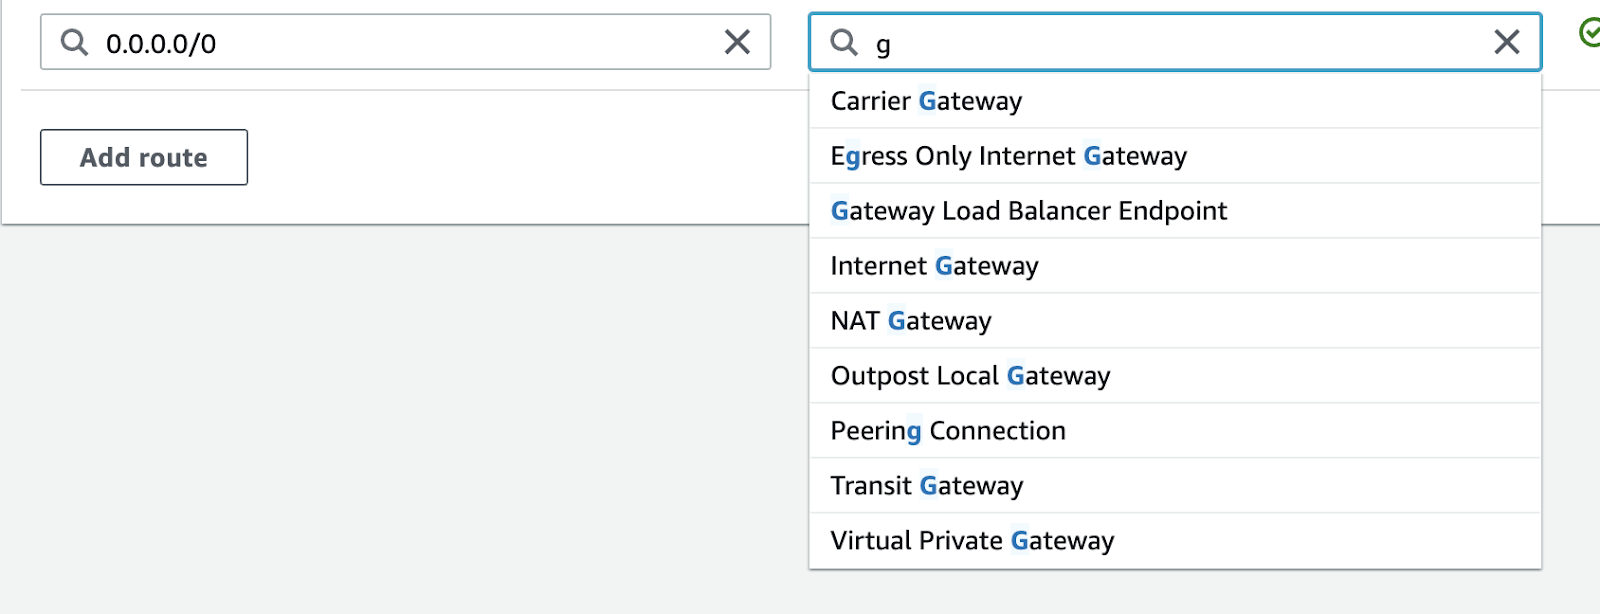 Search under Gateway Load Balancer Endpoint